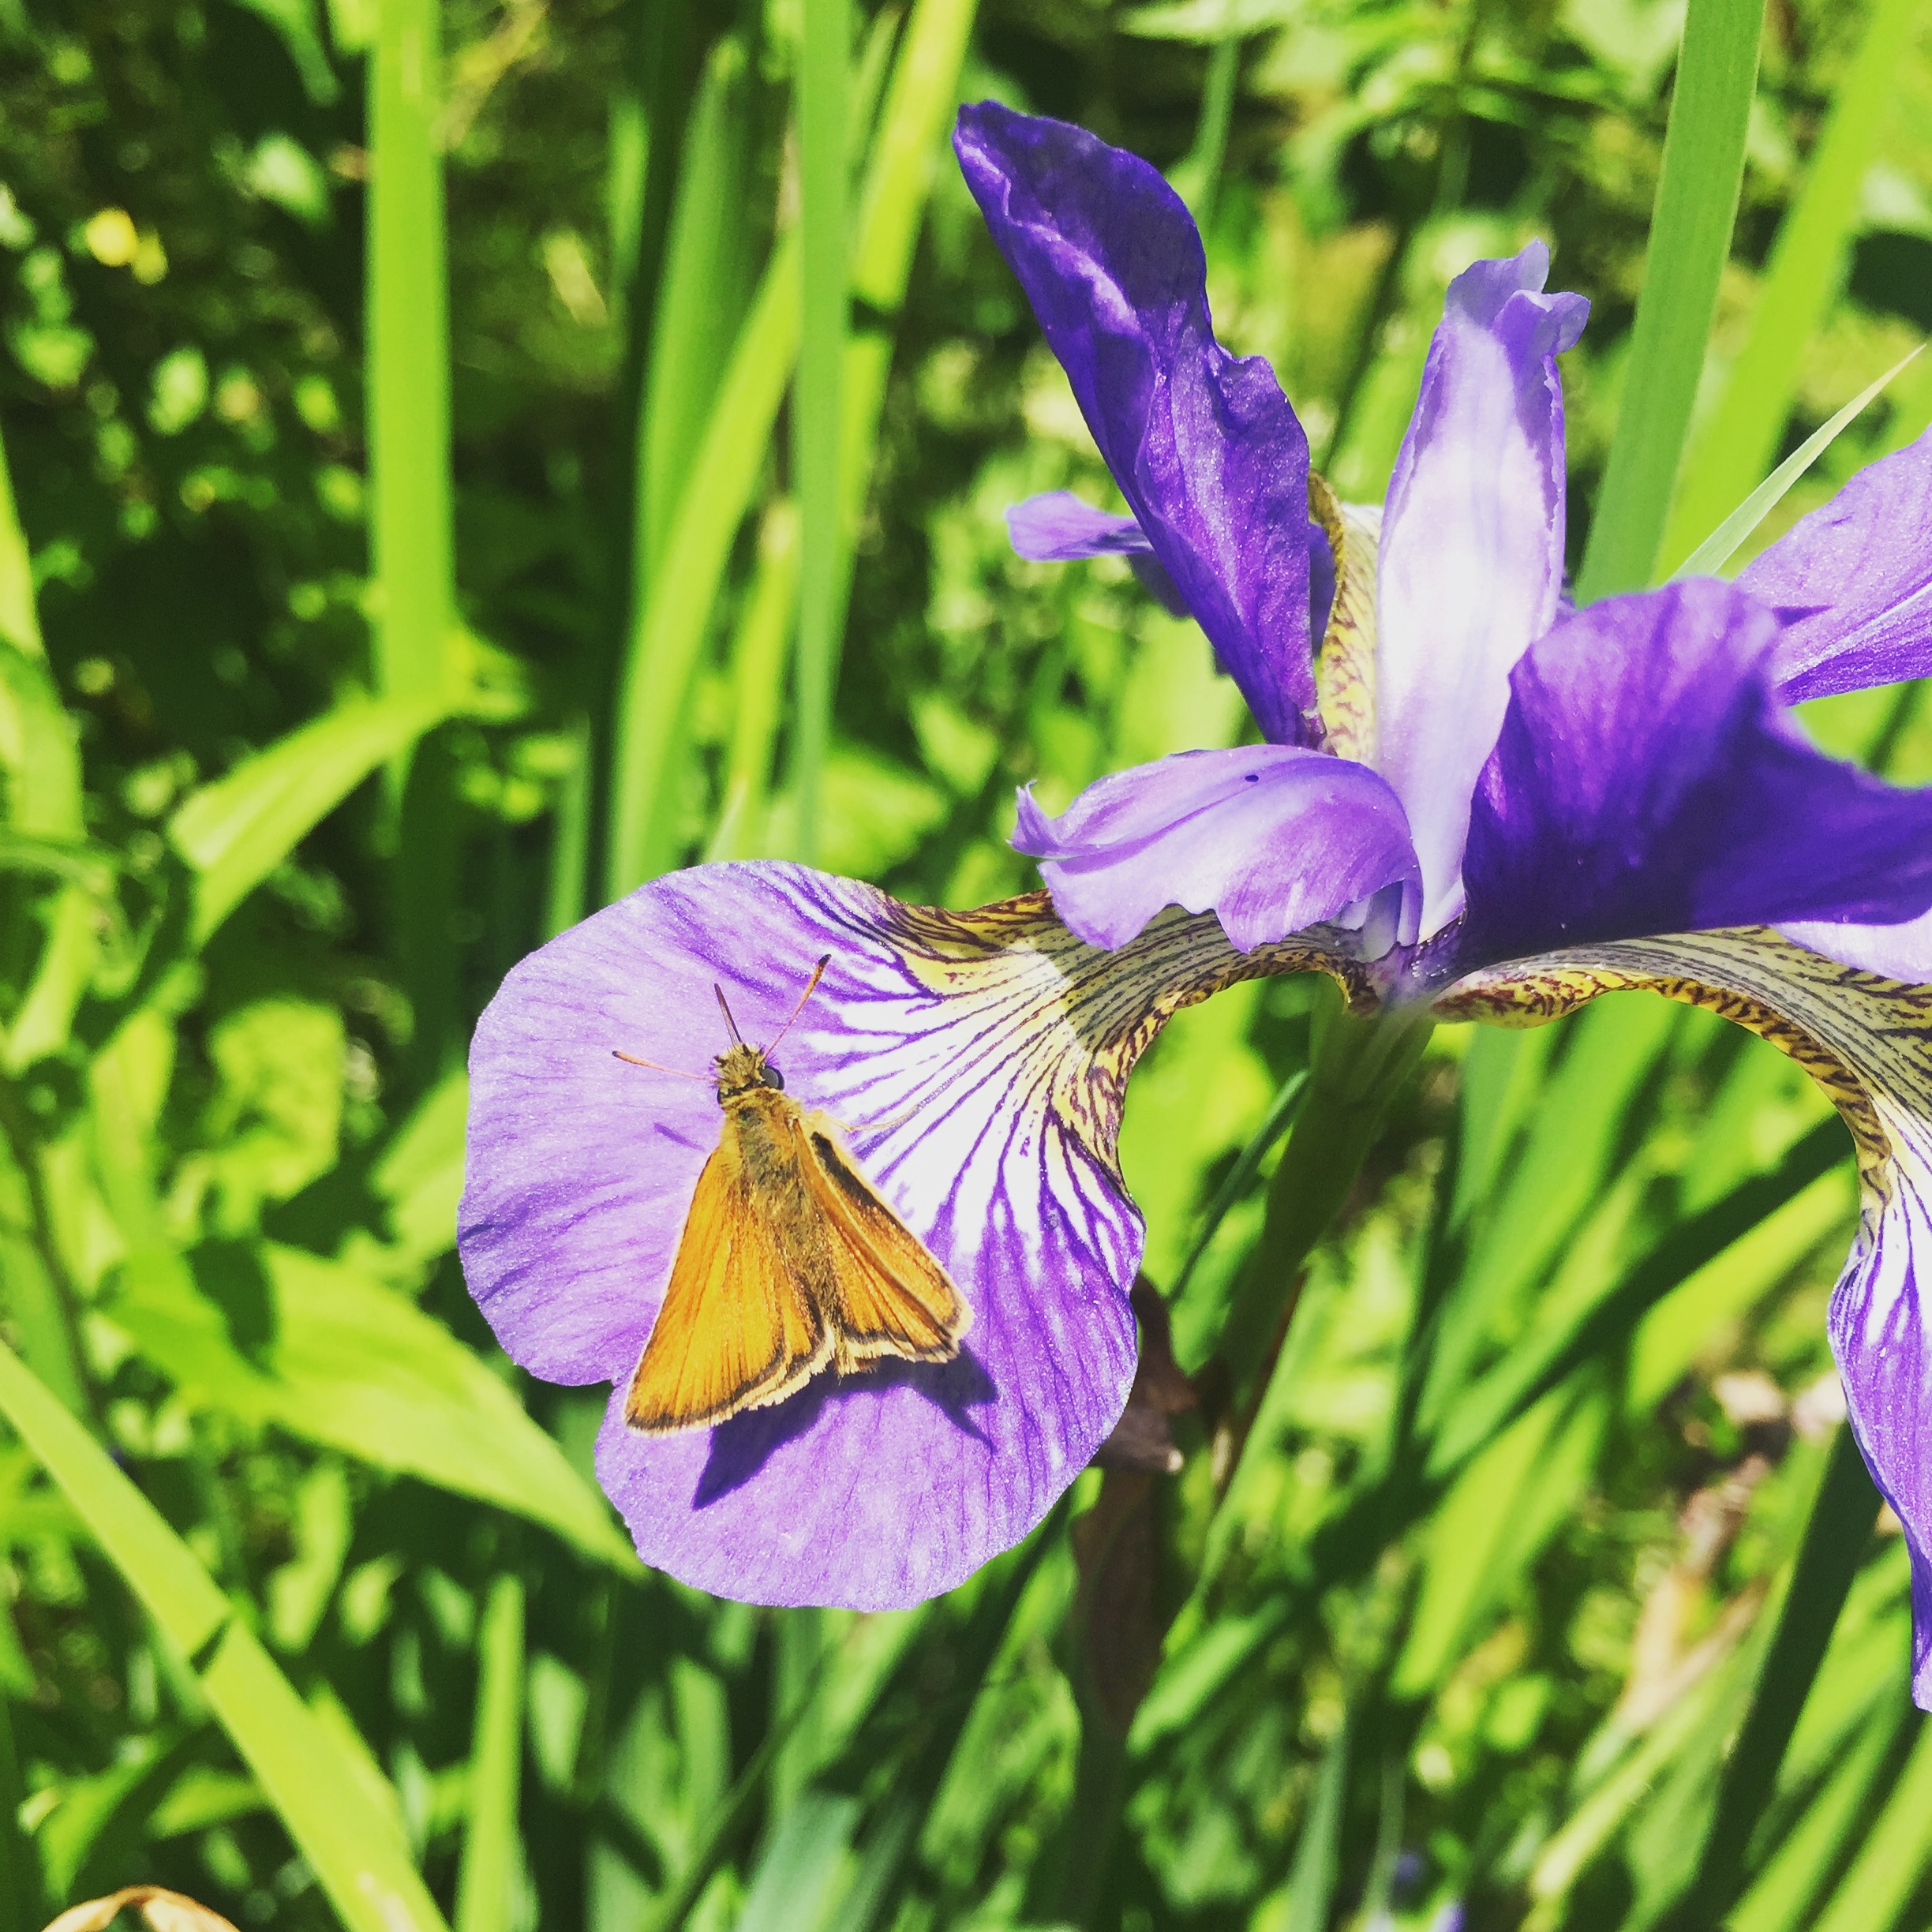  This Siberian iris has a visitor. 